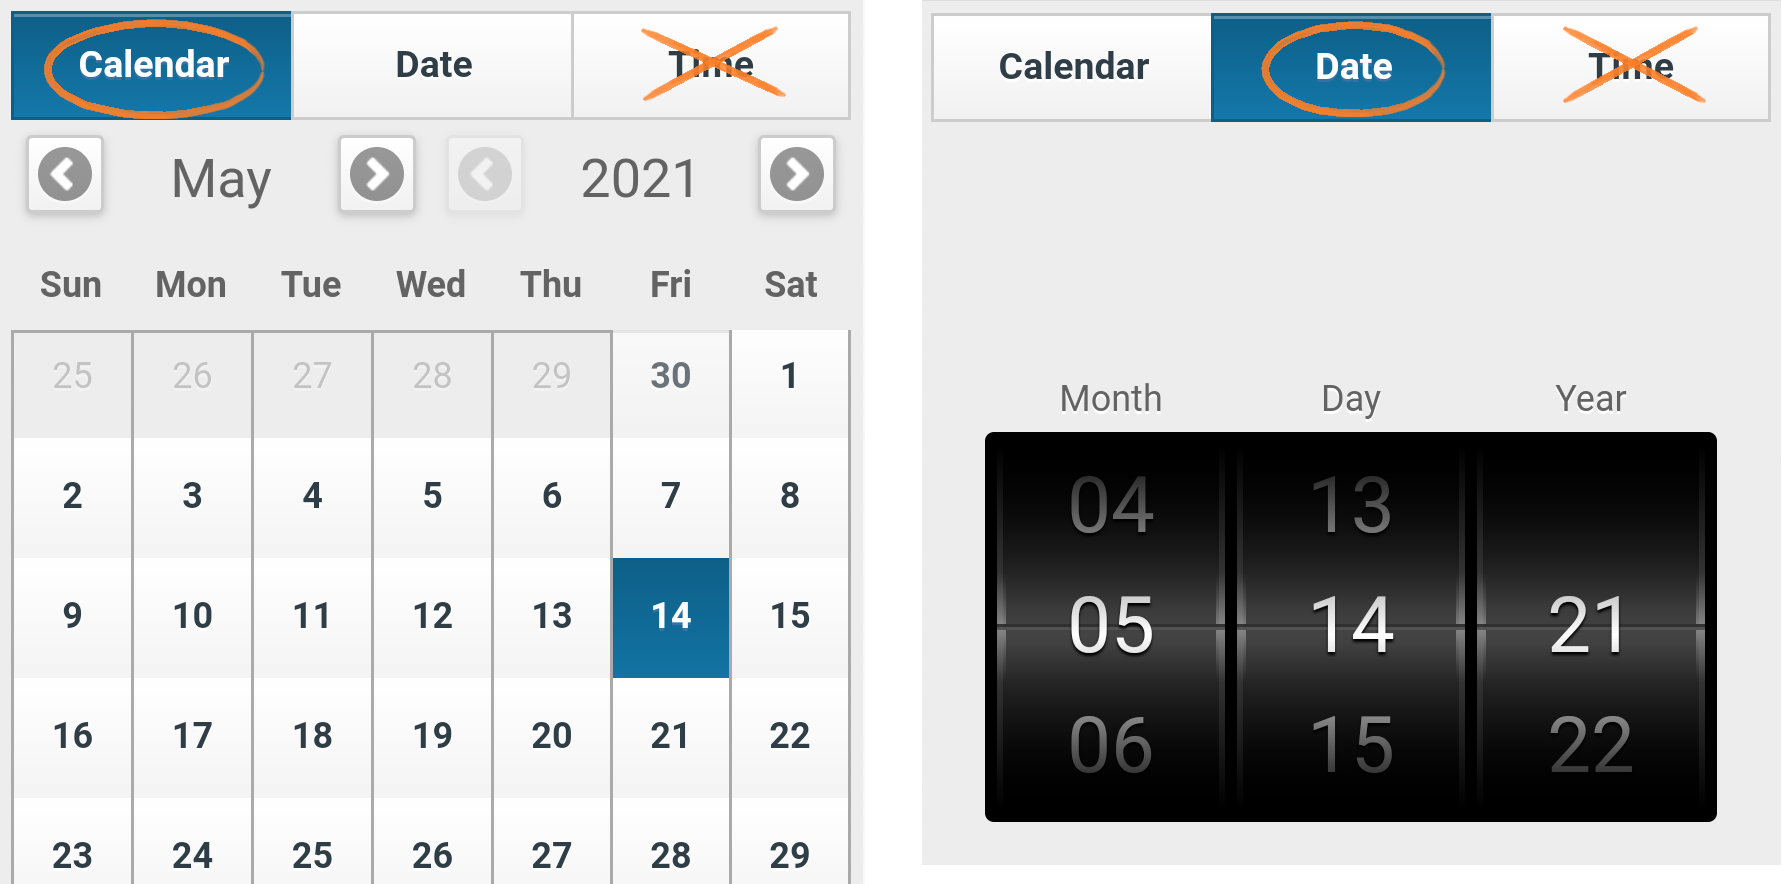 Calendar and Date widgets